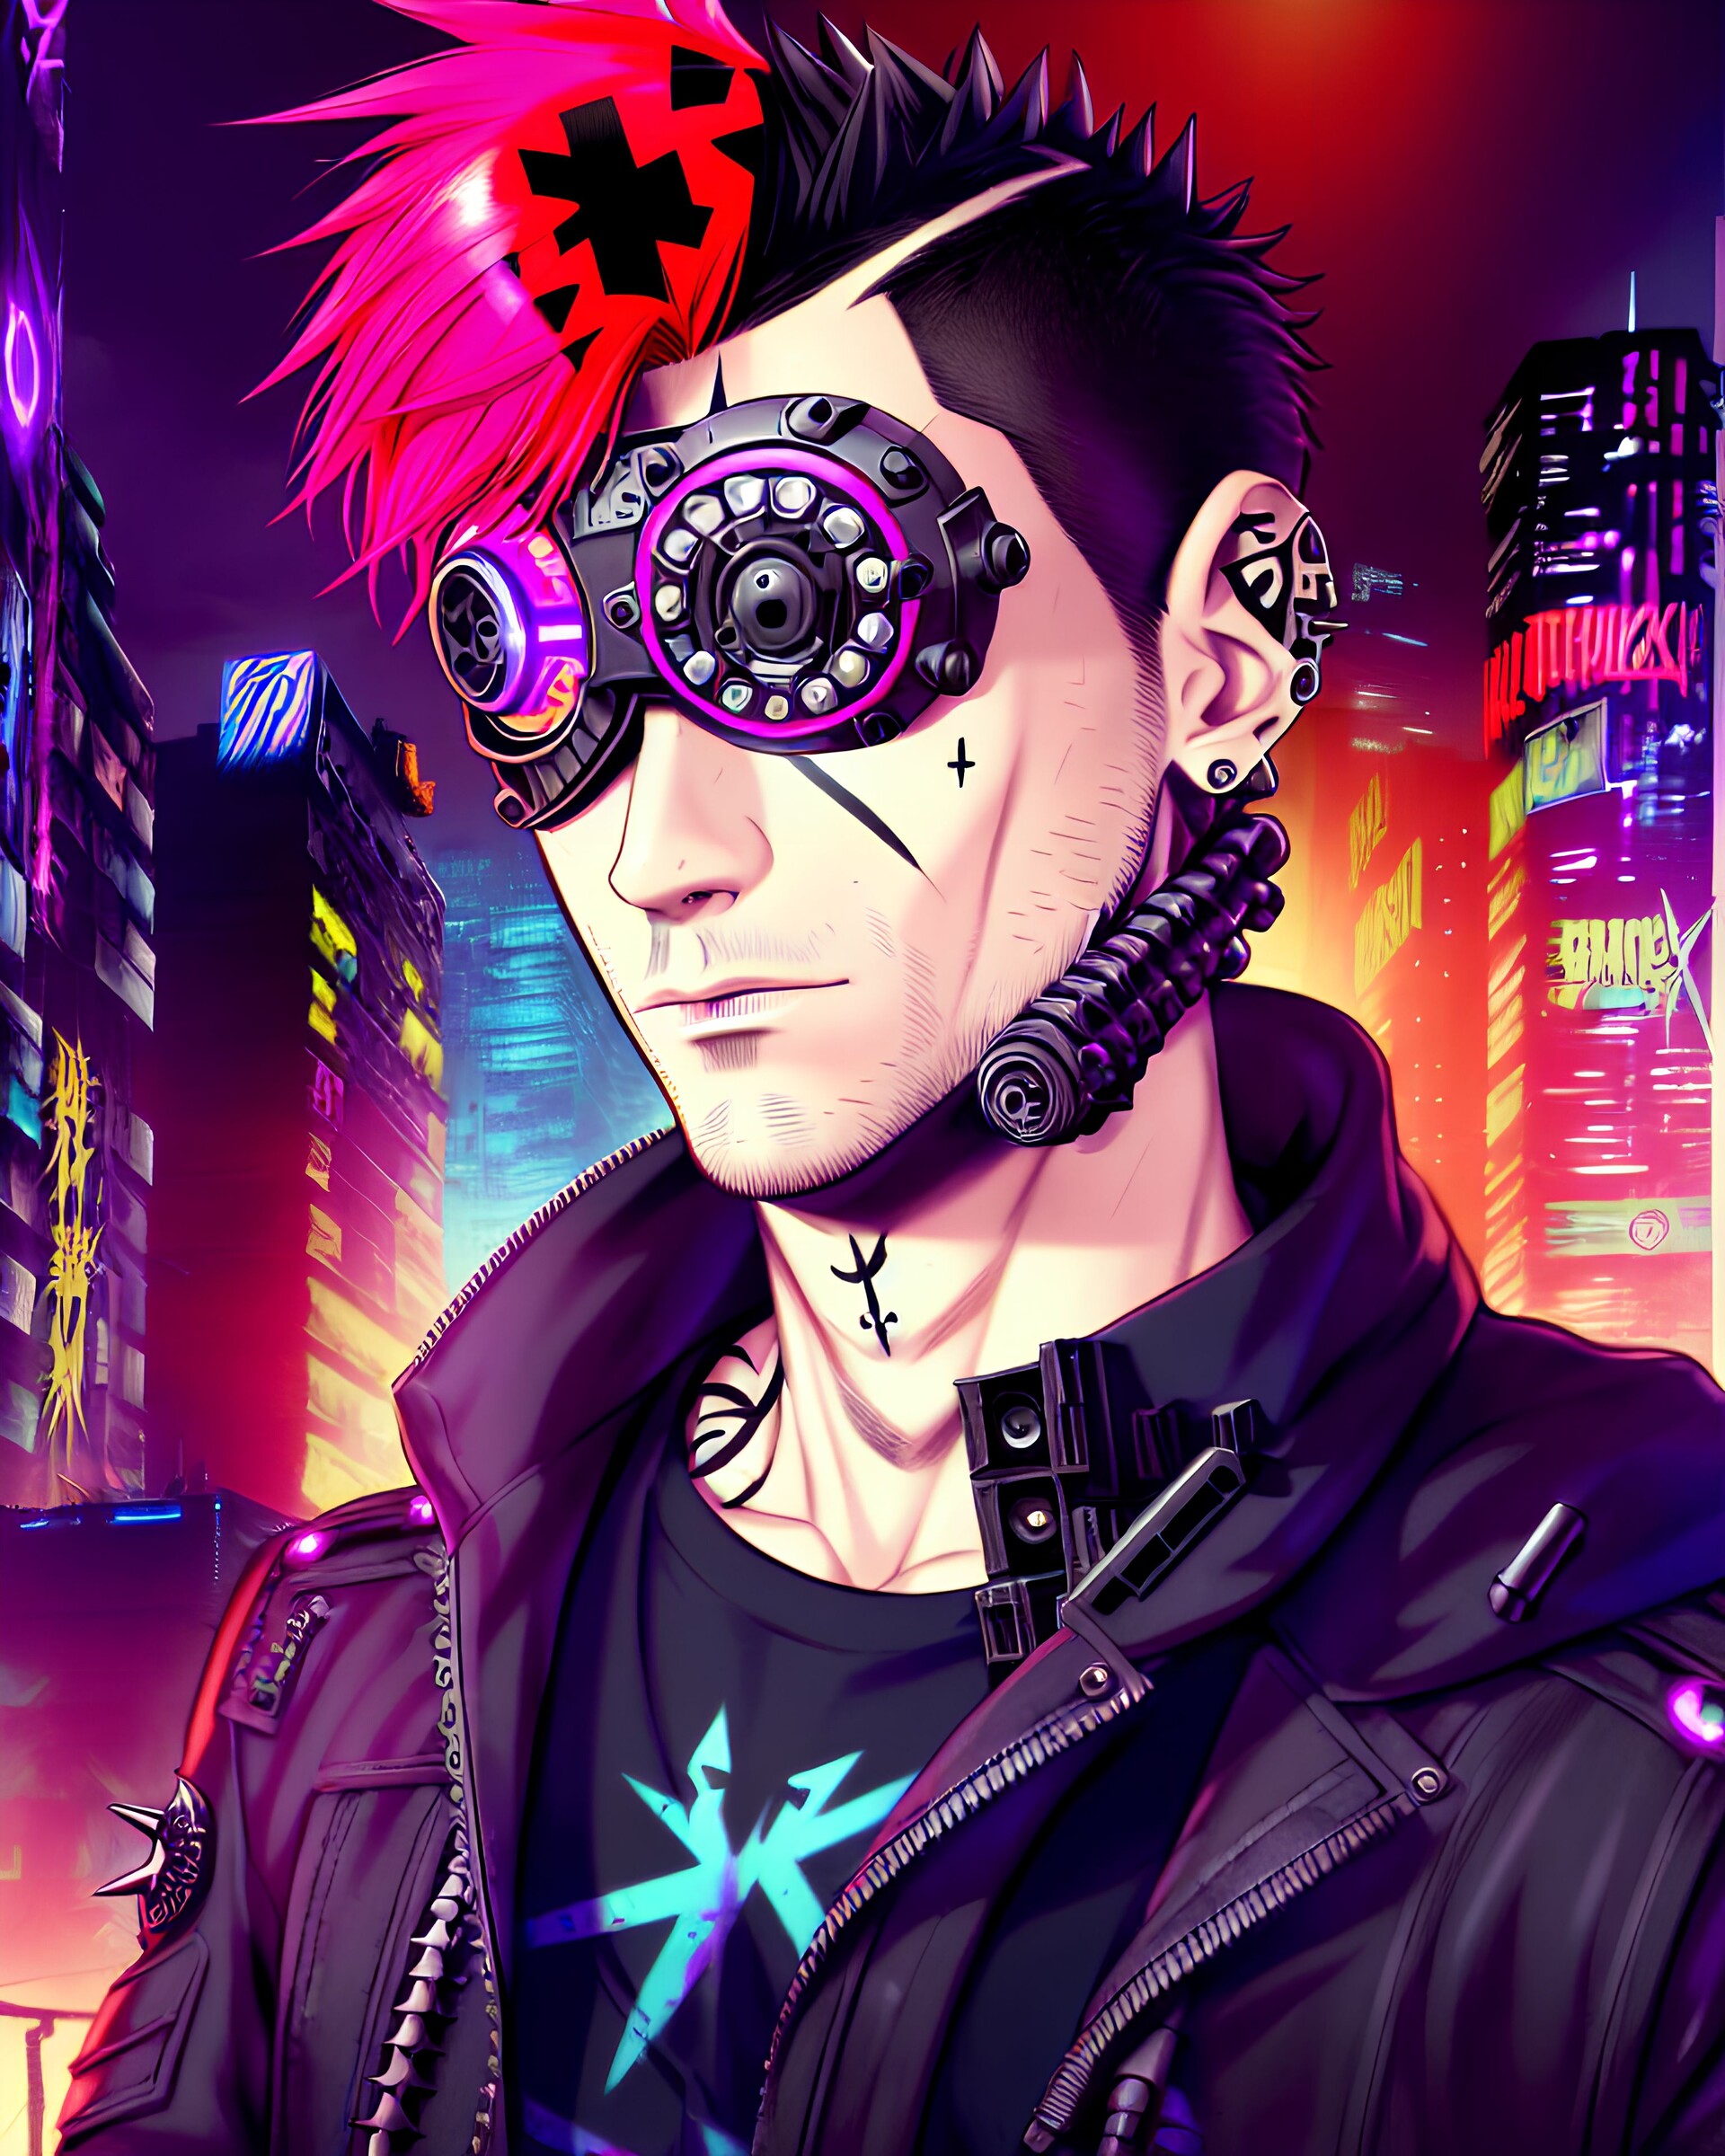 ANIME Cyberpunk Boy (6) by PunkerLazar on DeviantArt